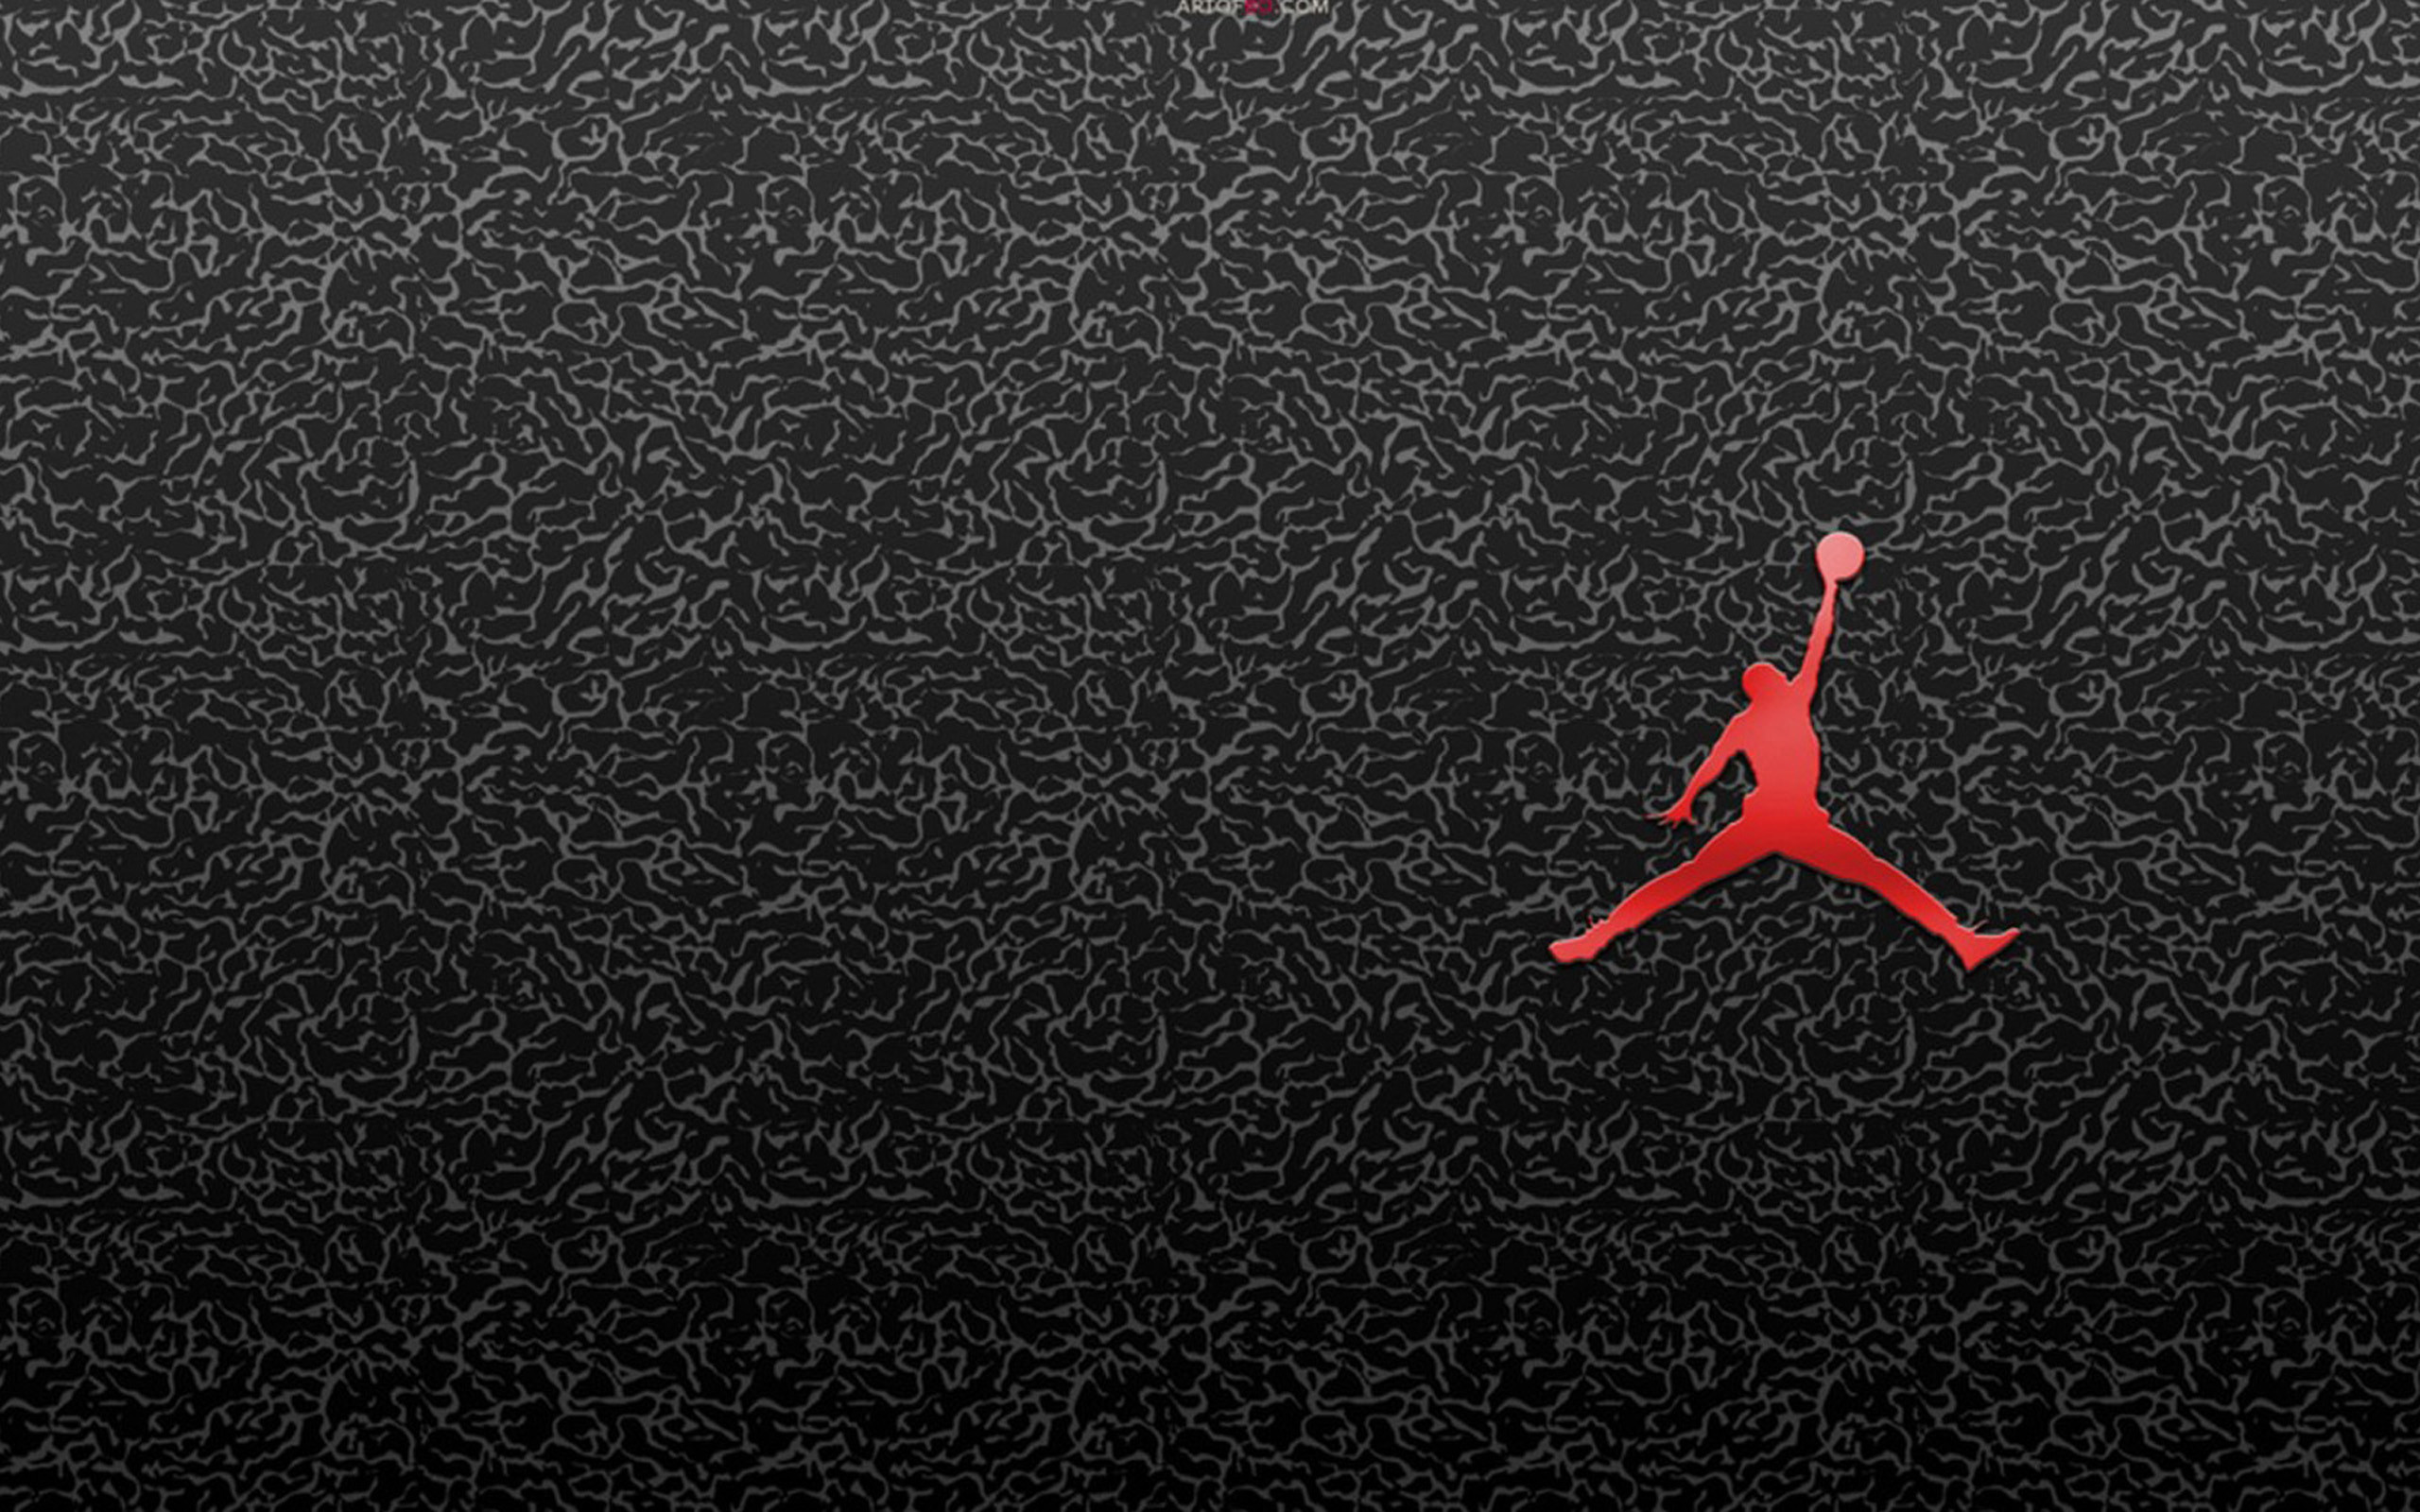 Michael Jordan Jersey Number wallpaper, 2880x1800, 581763